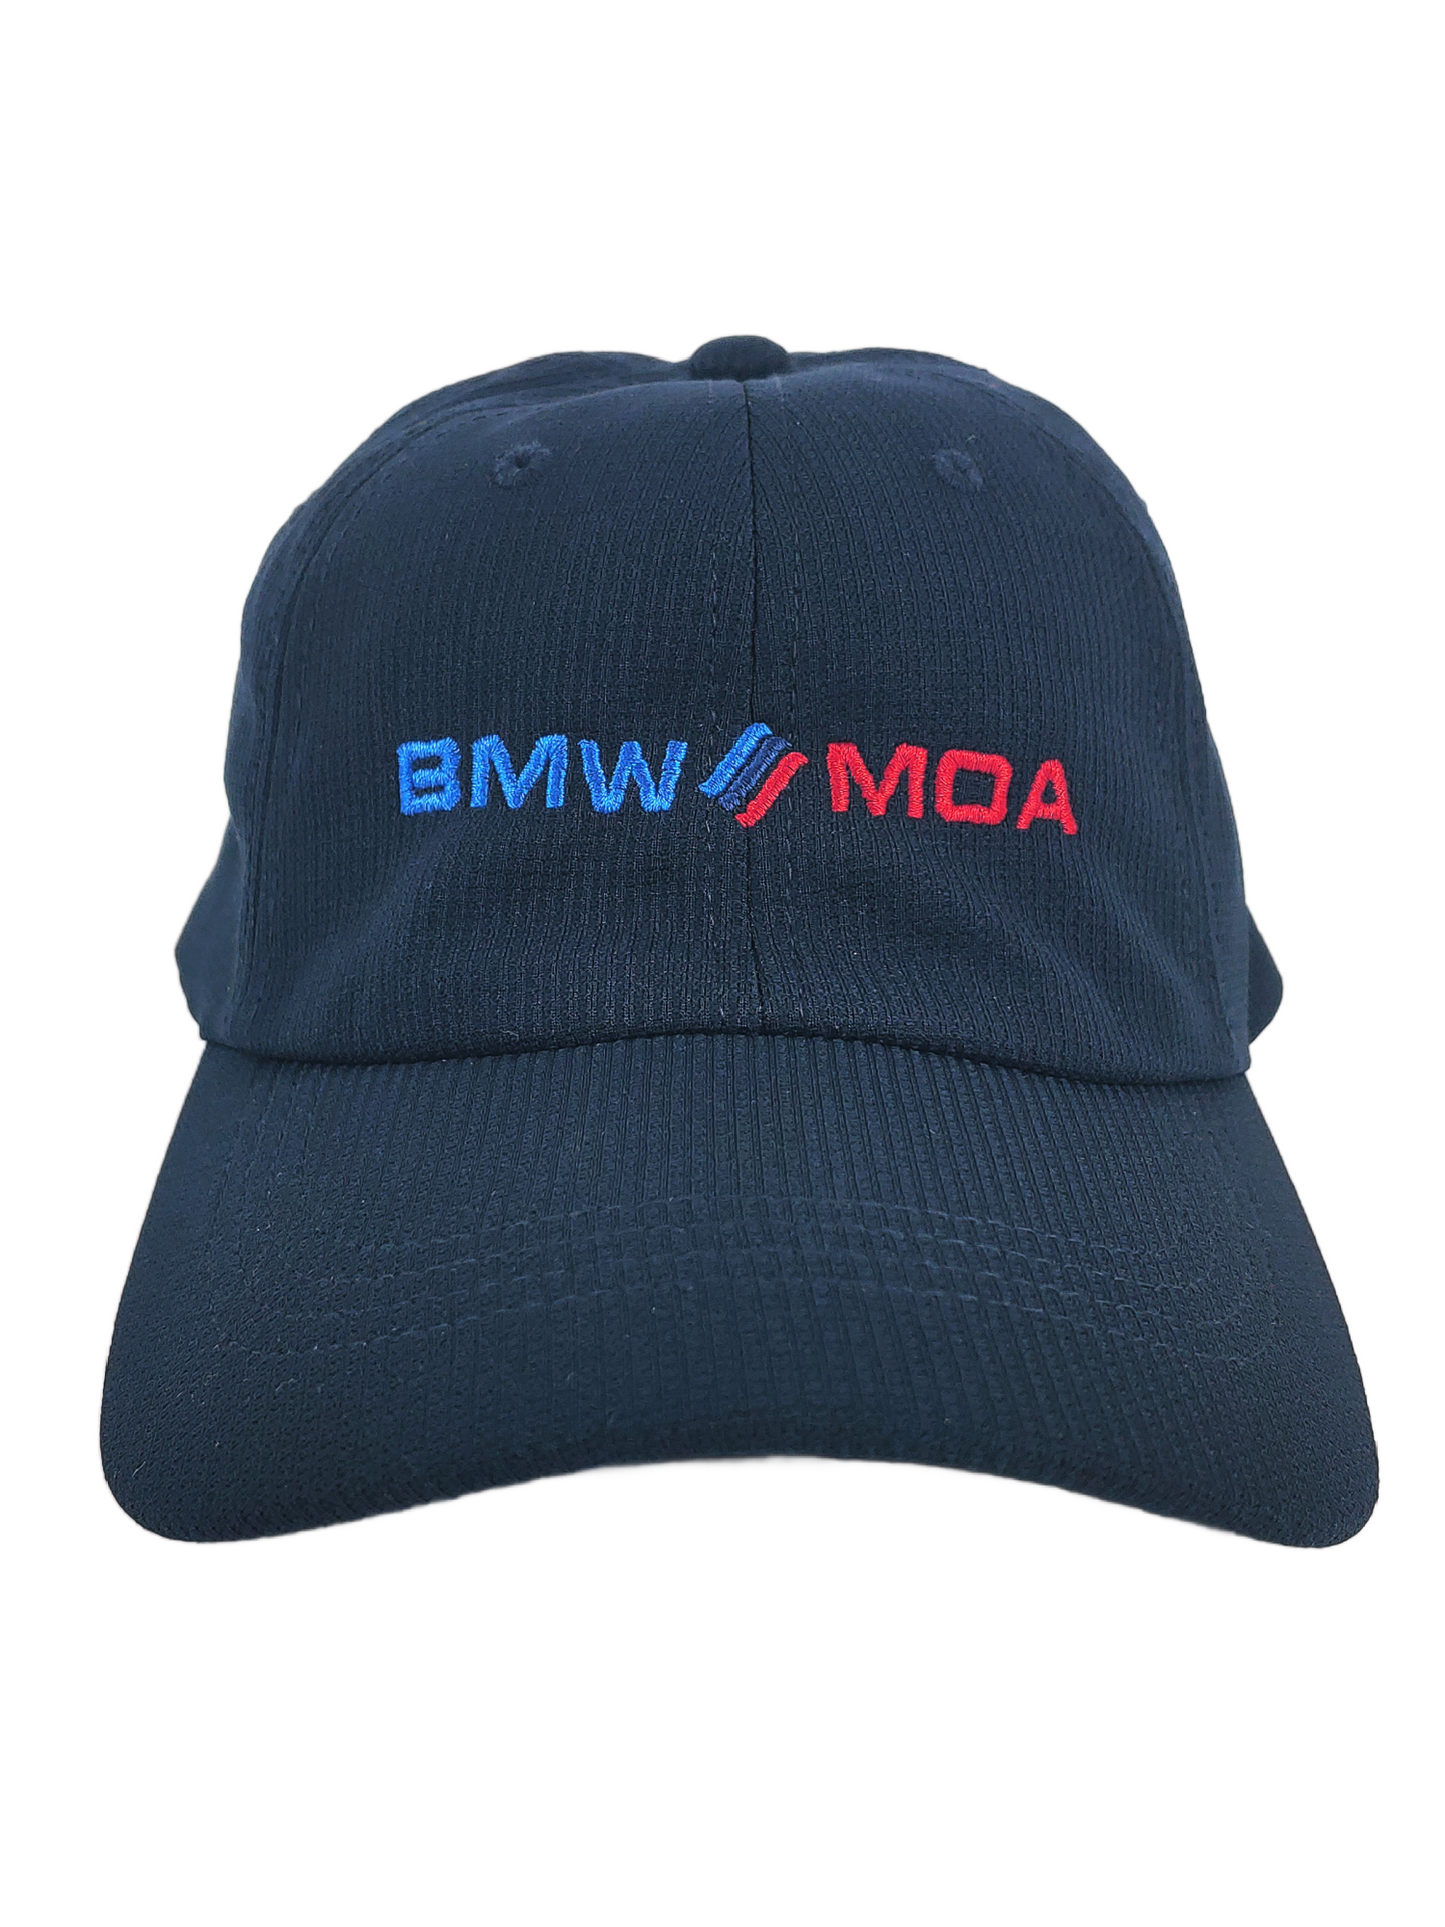 BMW MOA - Navy Terry Cloth - Unisex Baseball Style Hat